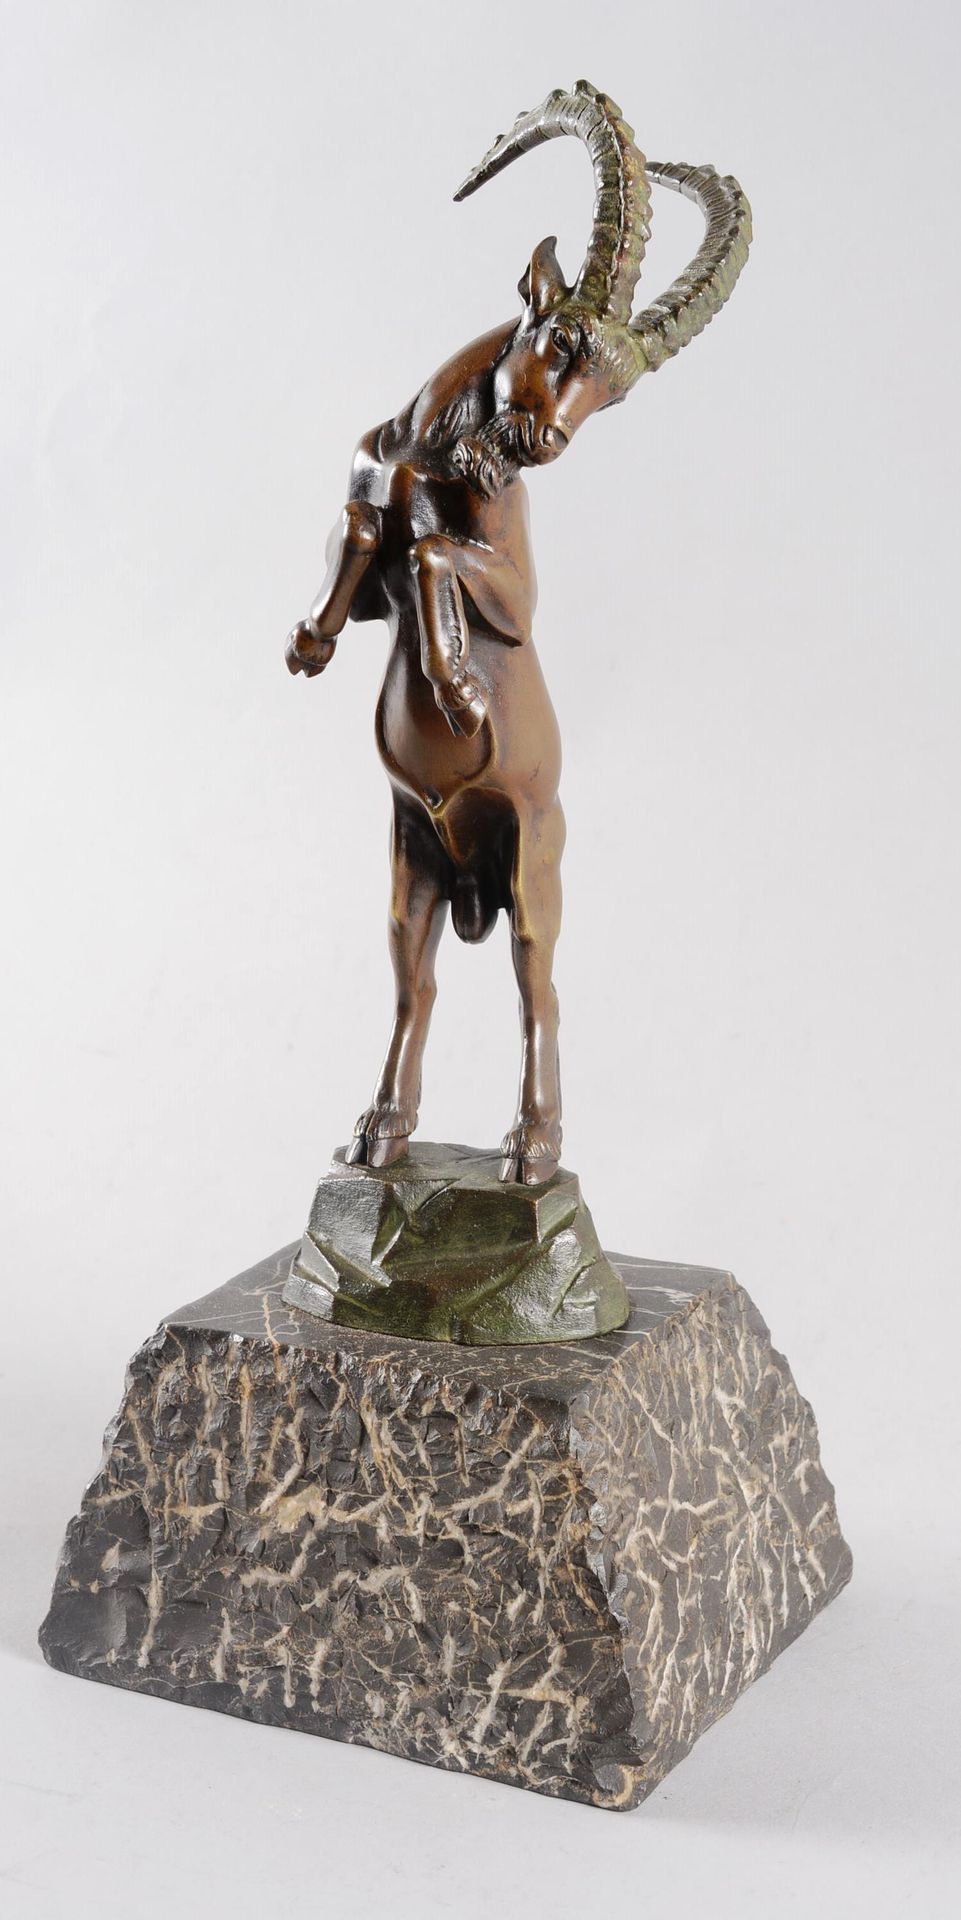 Erich SAALMANN (act.1918-1932) Erich SAALMANN (act.1918-1932)

"Ibex on a horse"&hellip;